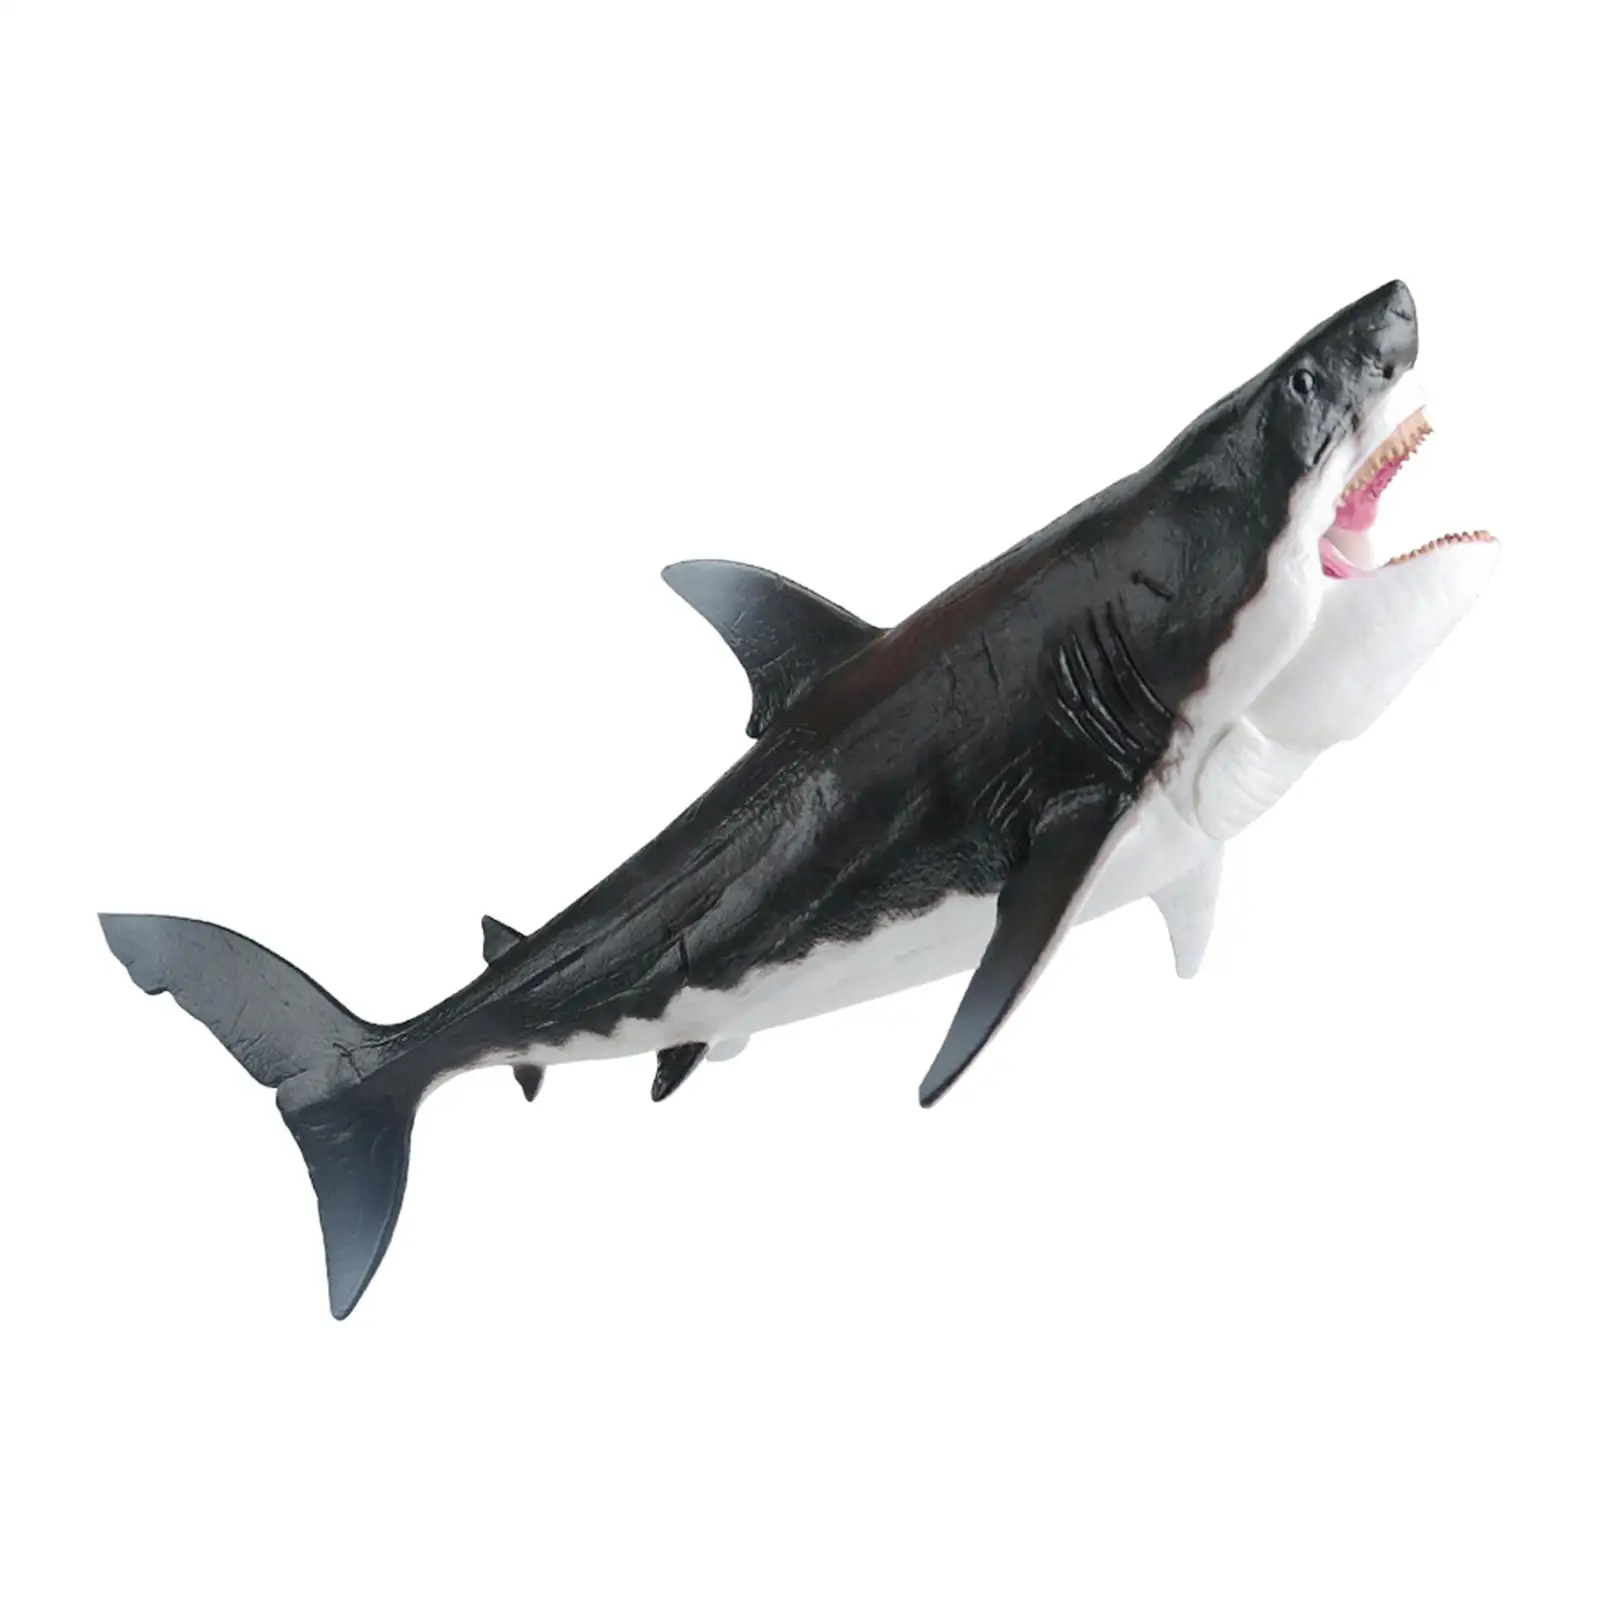 Big Shark Fish, Megalodon Action Figure, Education Kids Toy, Sea Aquarium Model